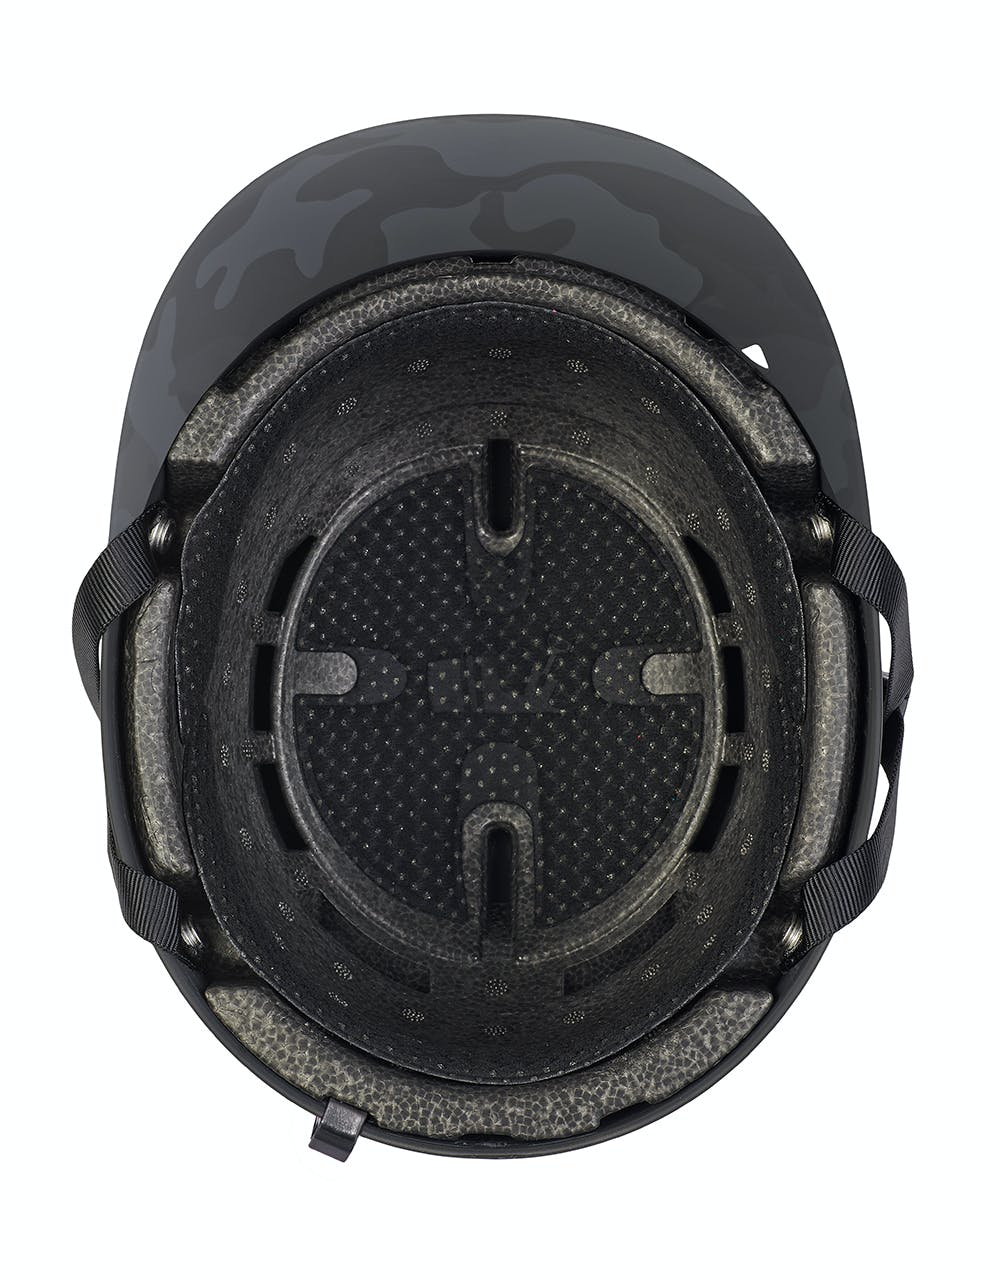 Sandbox Classic 2.0 2020 Snowboard Helmet - Black Camo